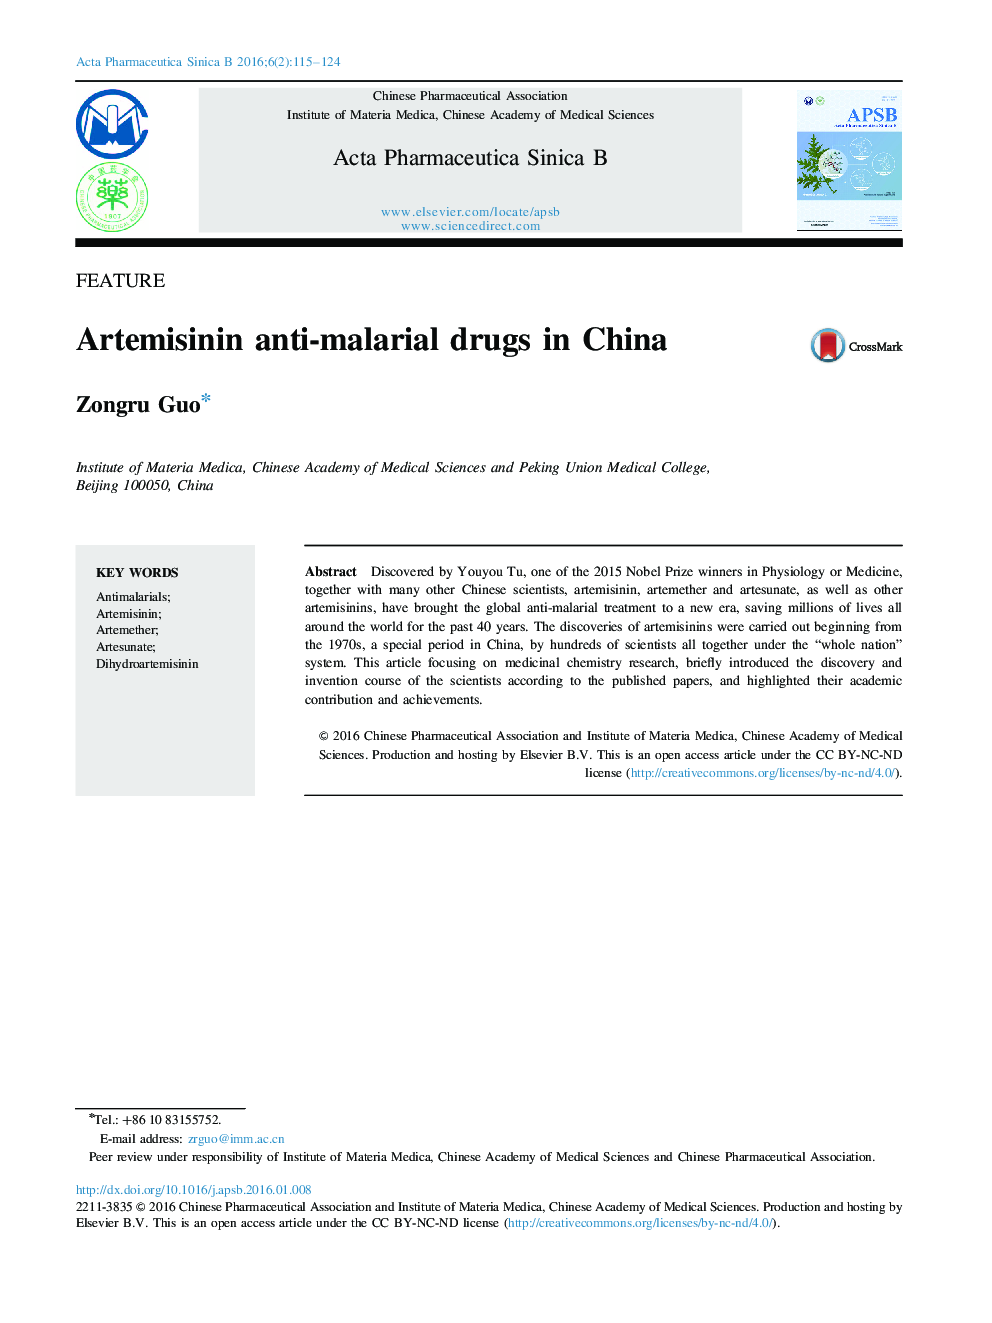 Artemisinin anti-malarial drugs in China 